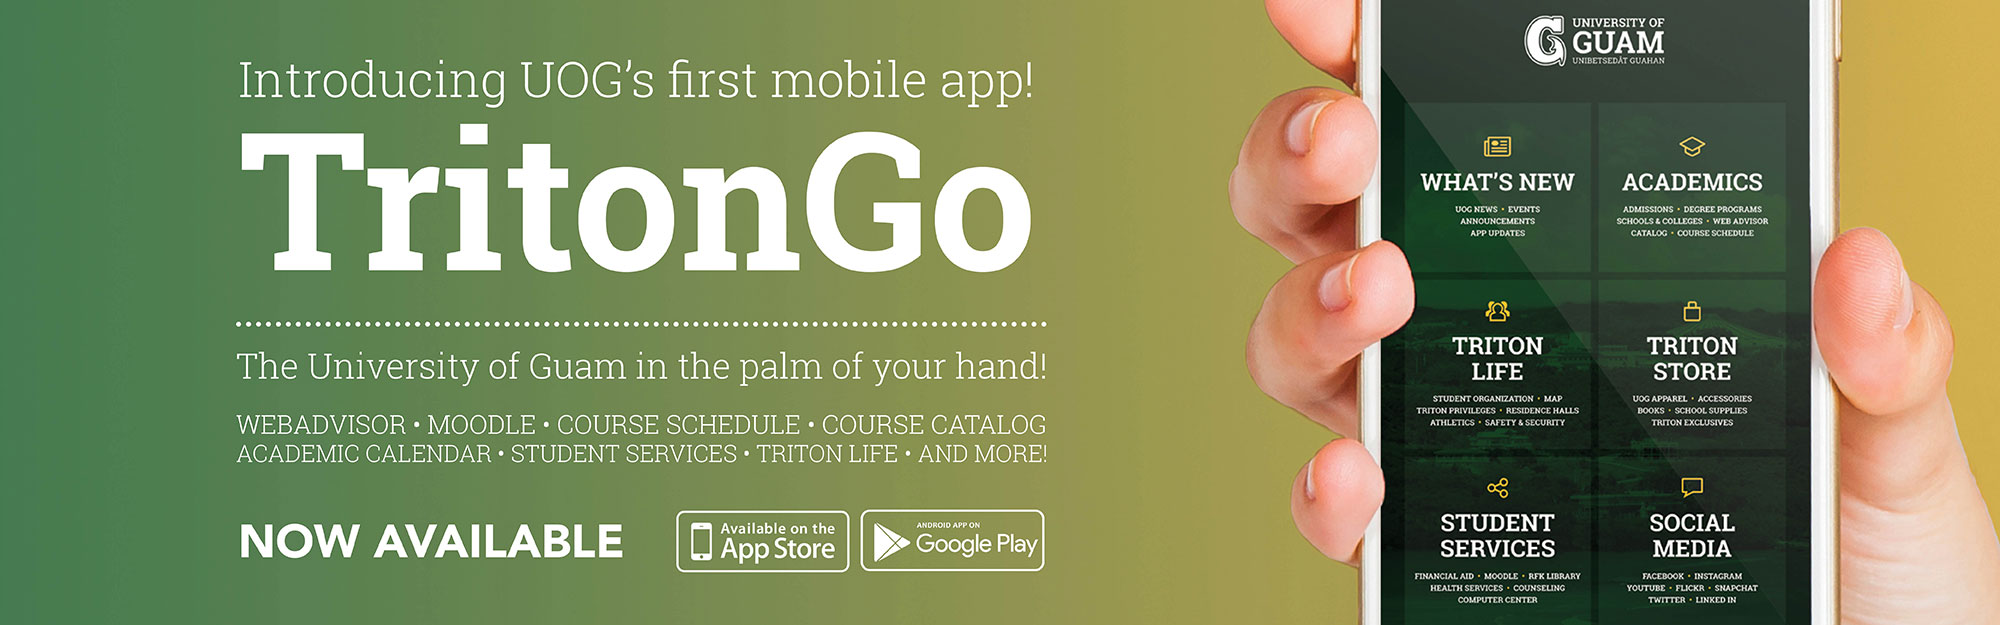 TritonGo Mobile App